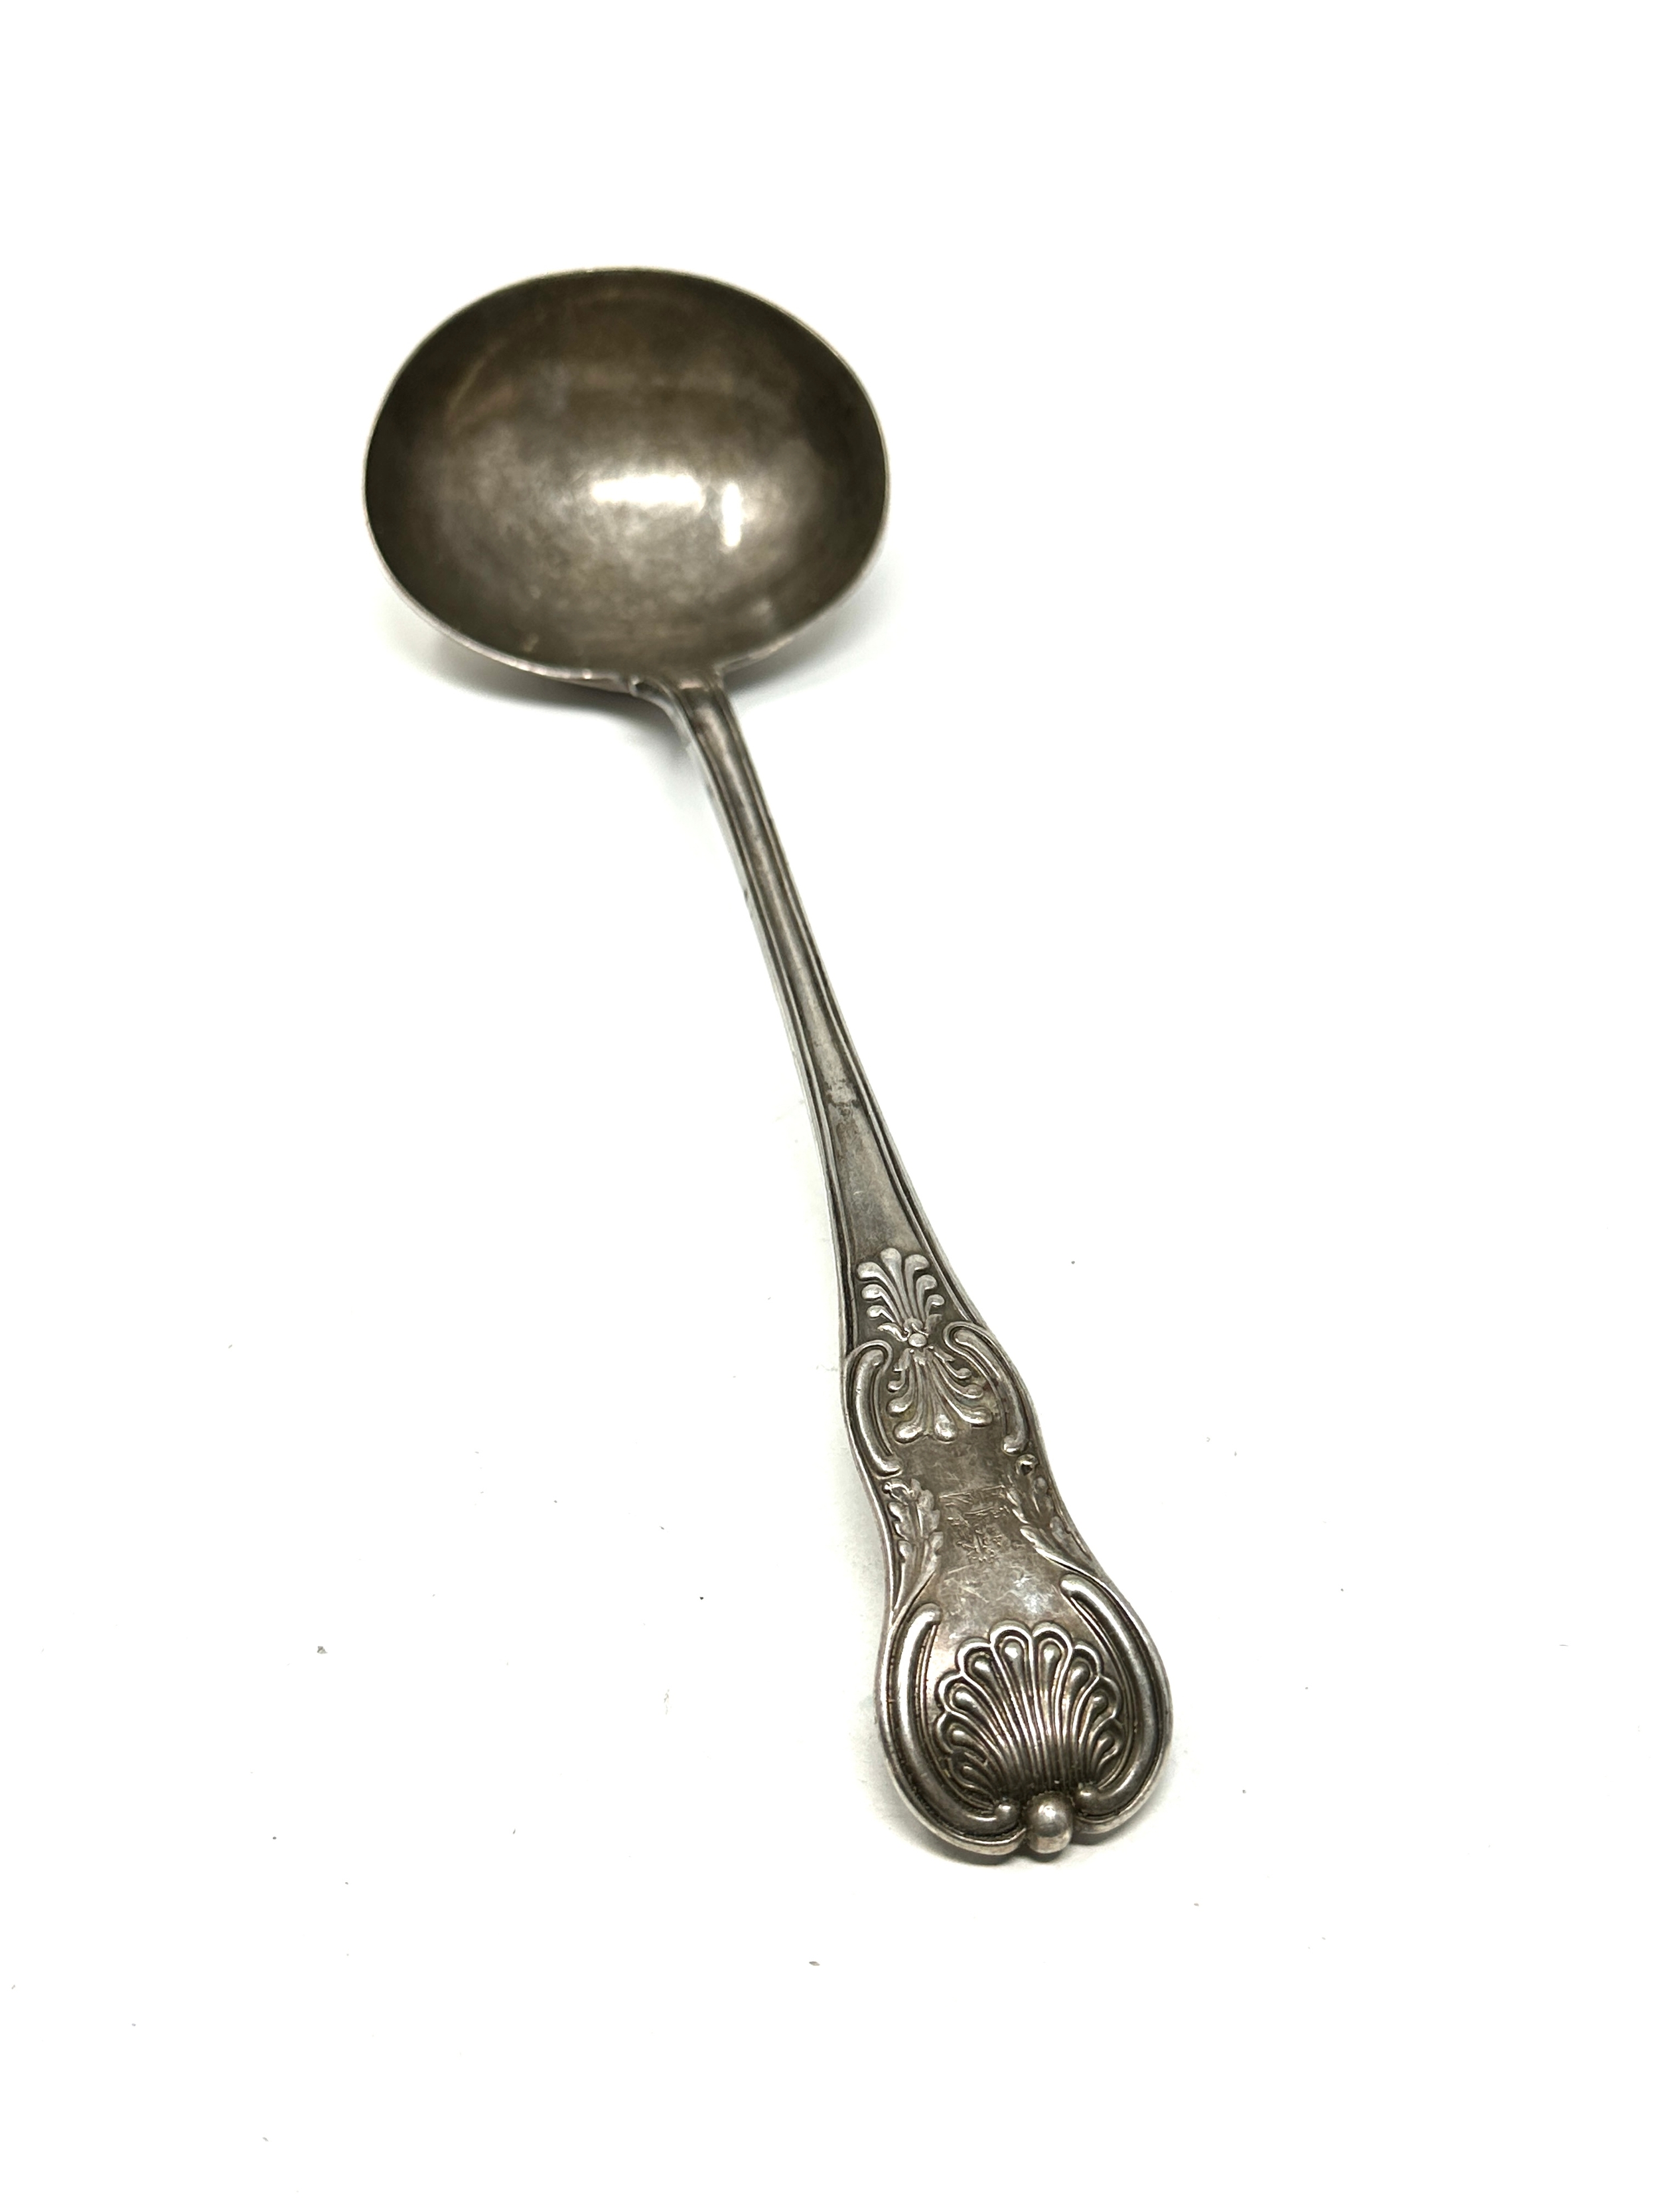 Antique 1820 georgian silver soup ladle London silver hallmarks maker william collins